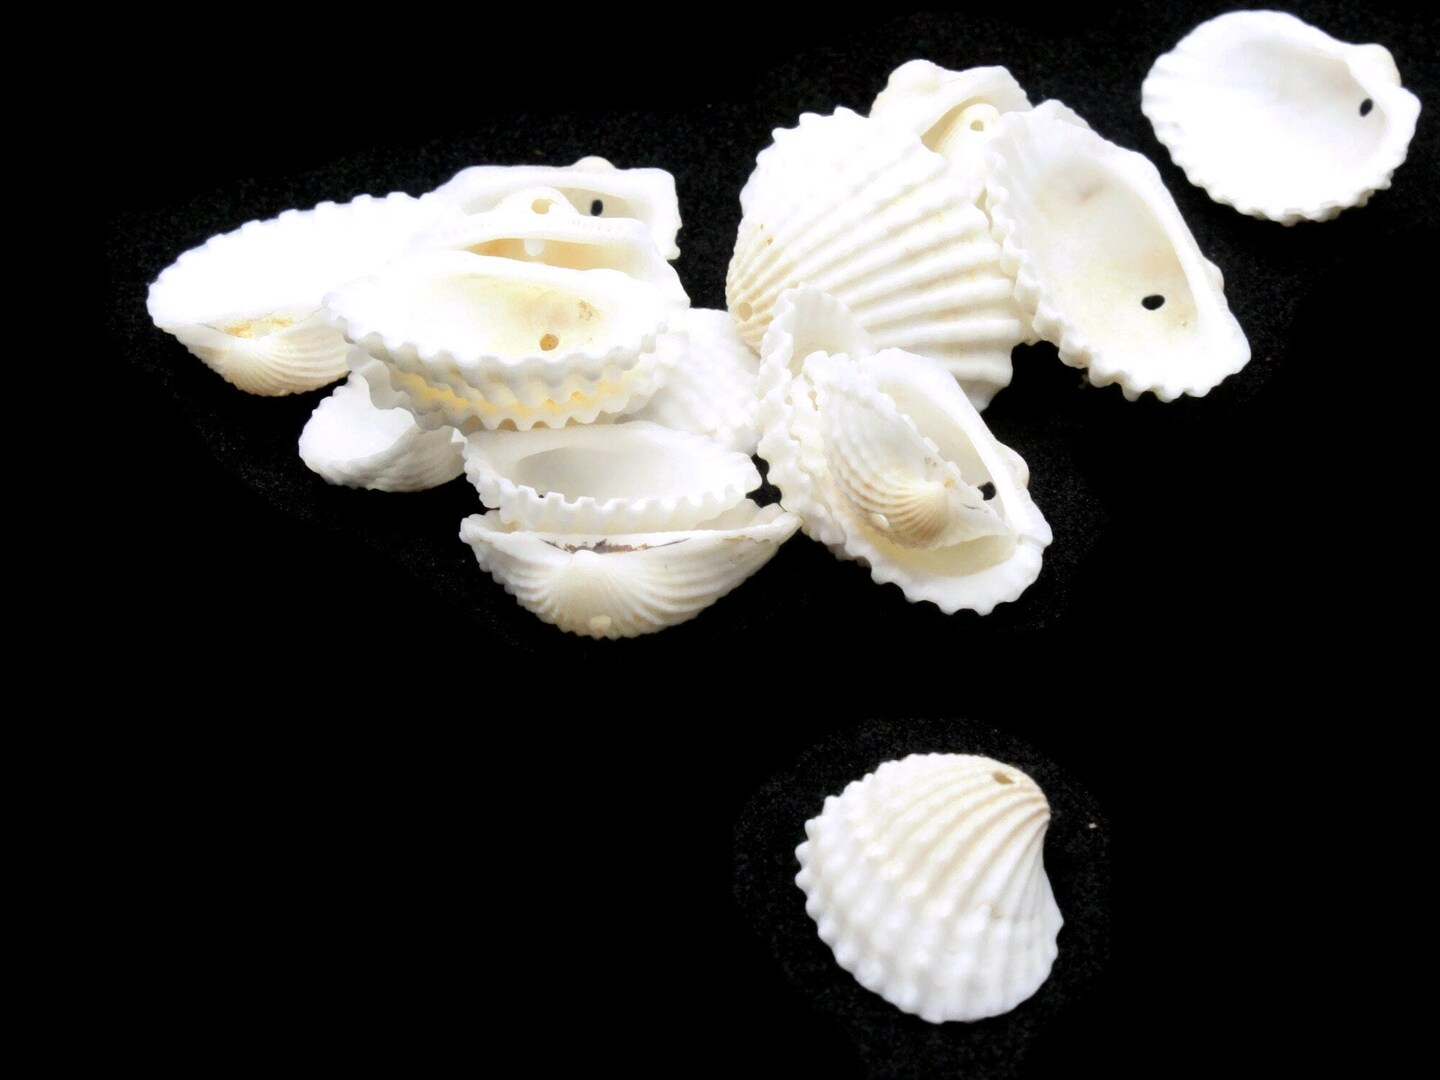 19 White Oyster Shell Seashell Beads